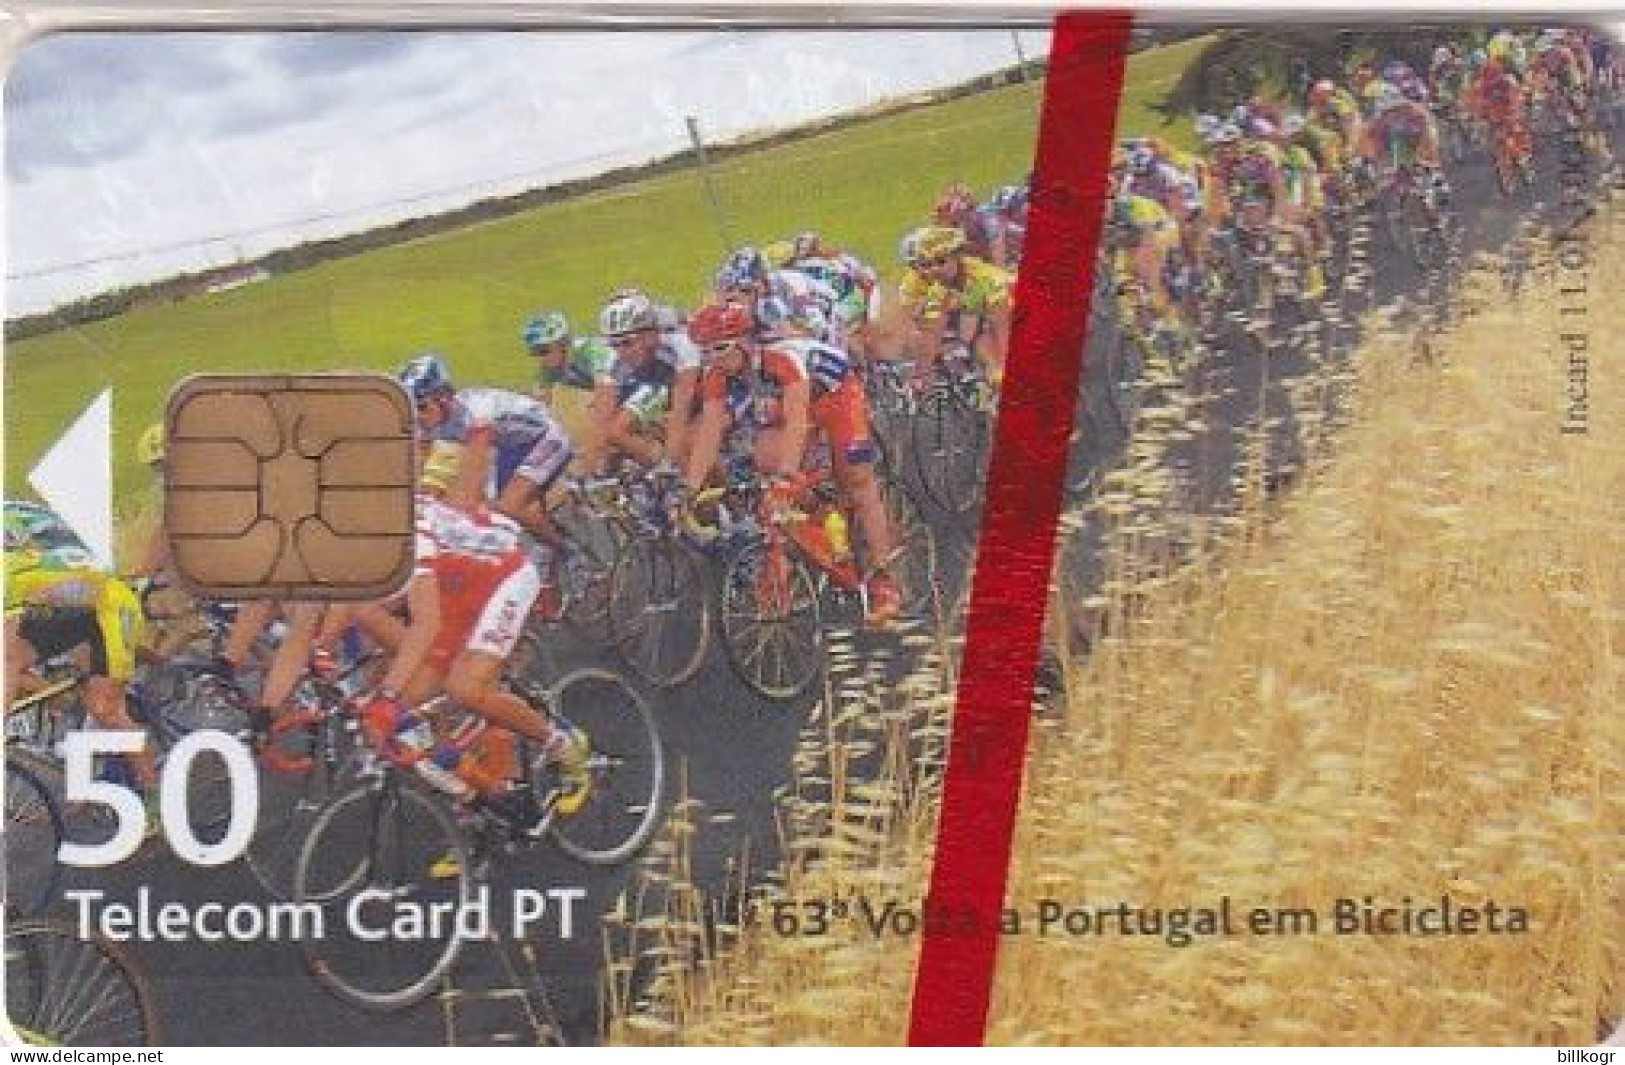 PORTUGAL - Cycling, 63ª Volta Portugal Em Bicicleta 2, Tirage 3000, 11/01, Mint - Portugal